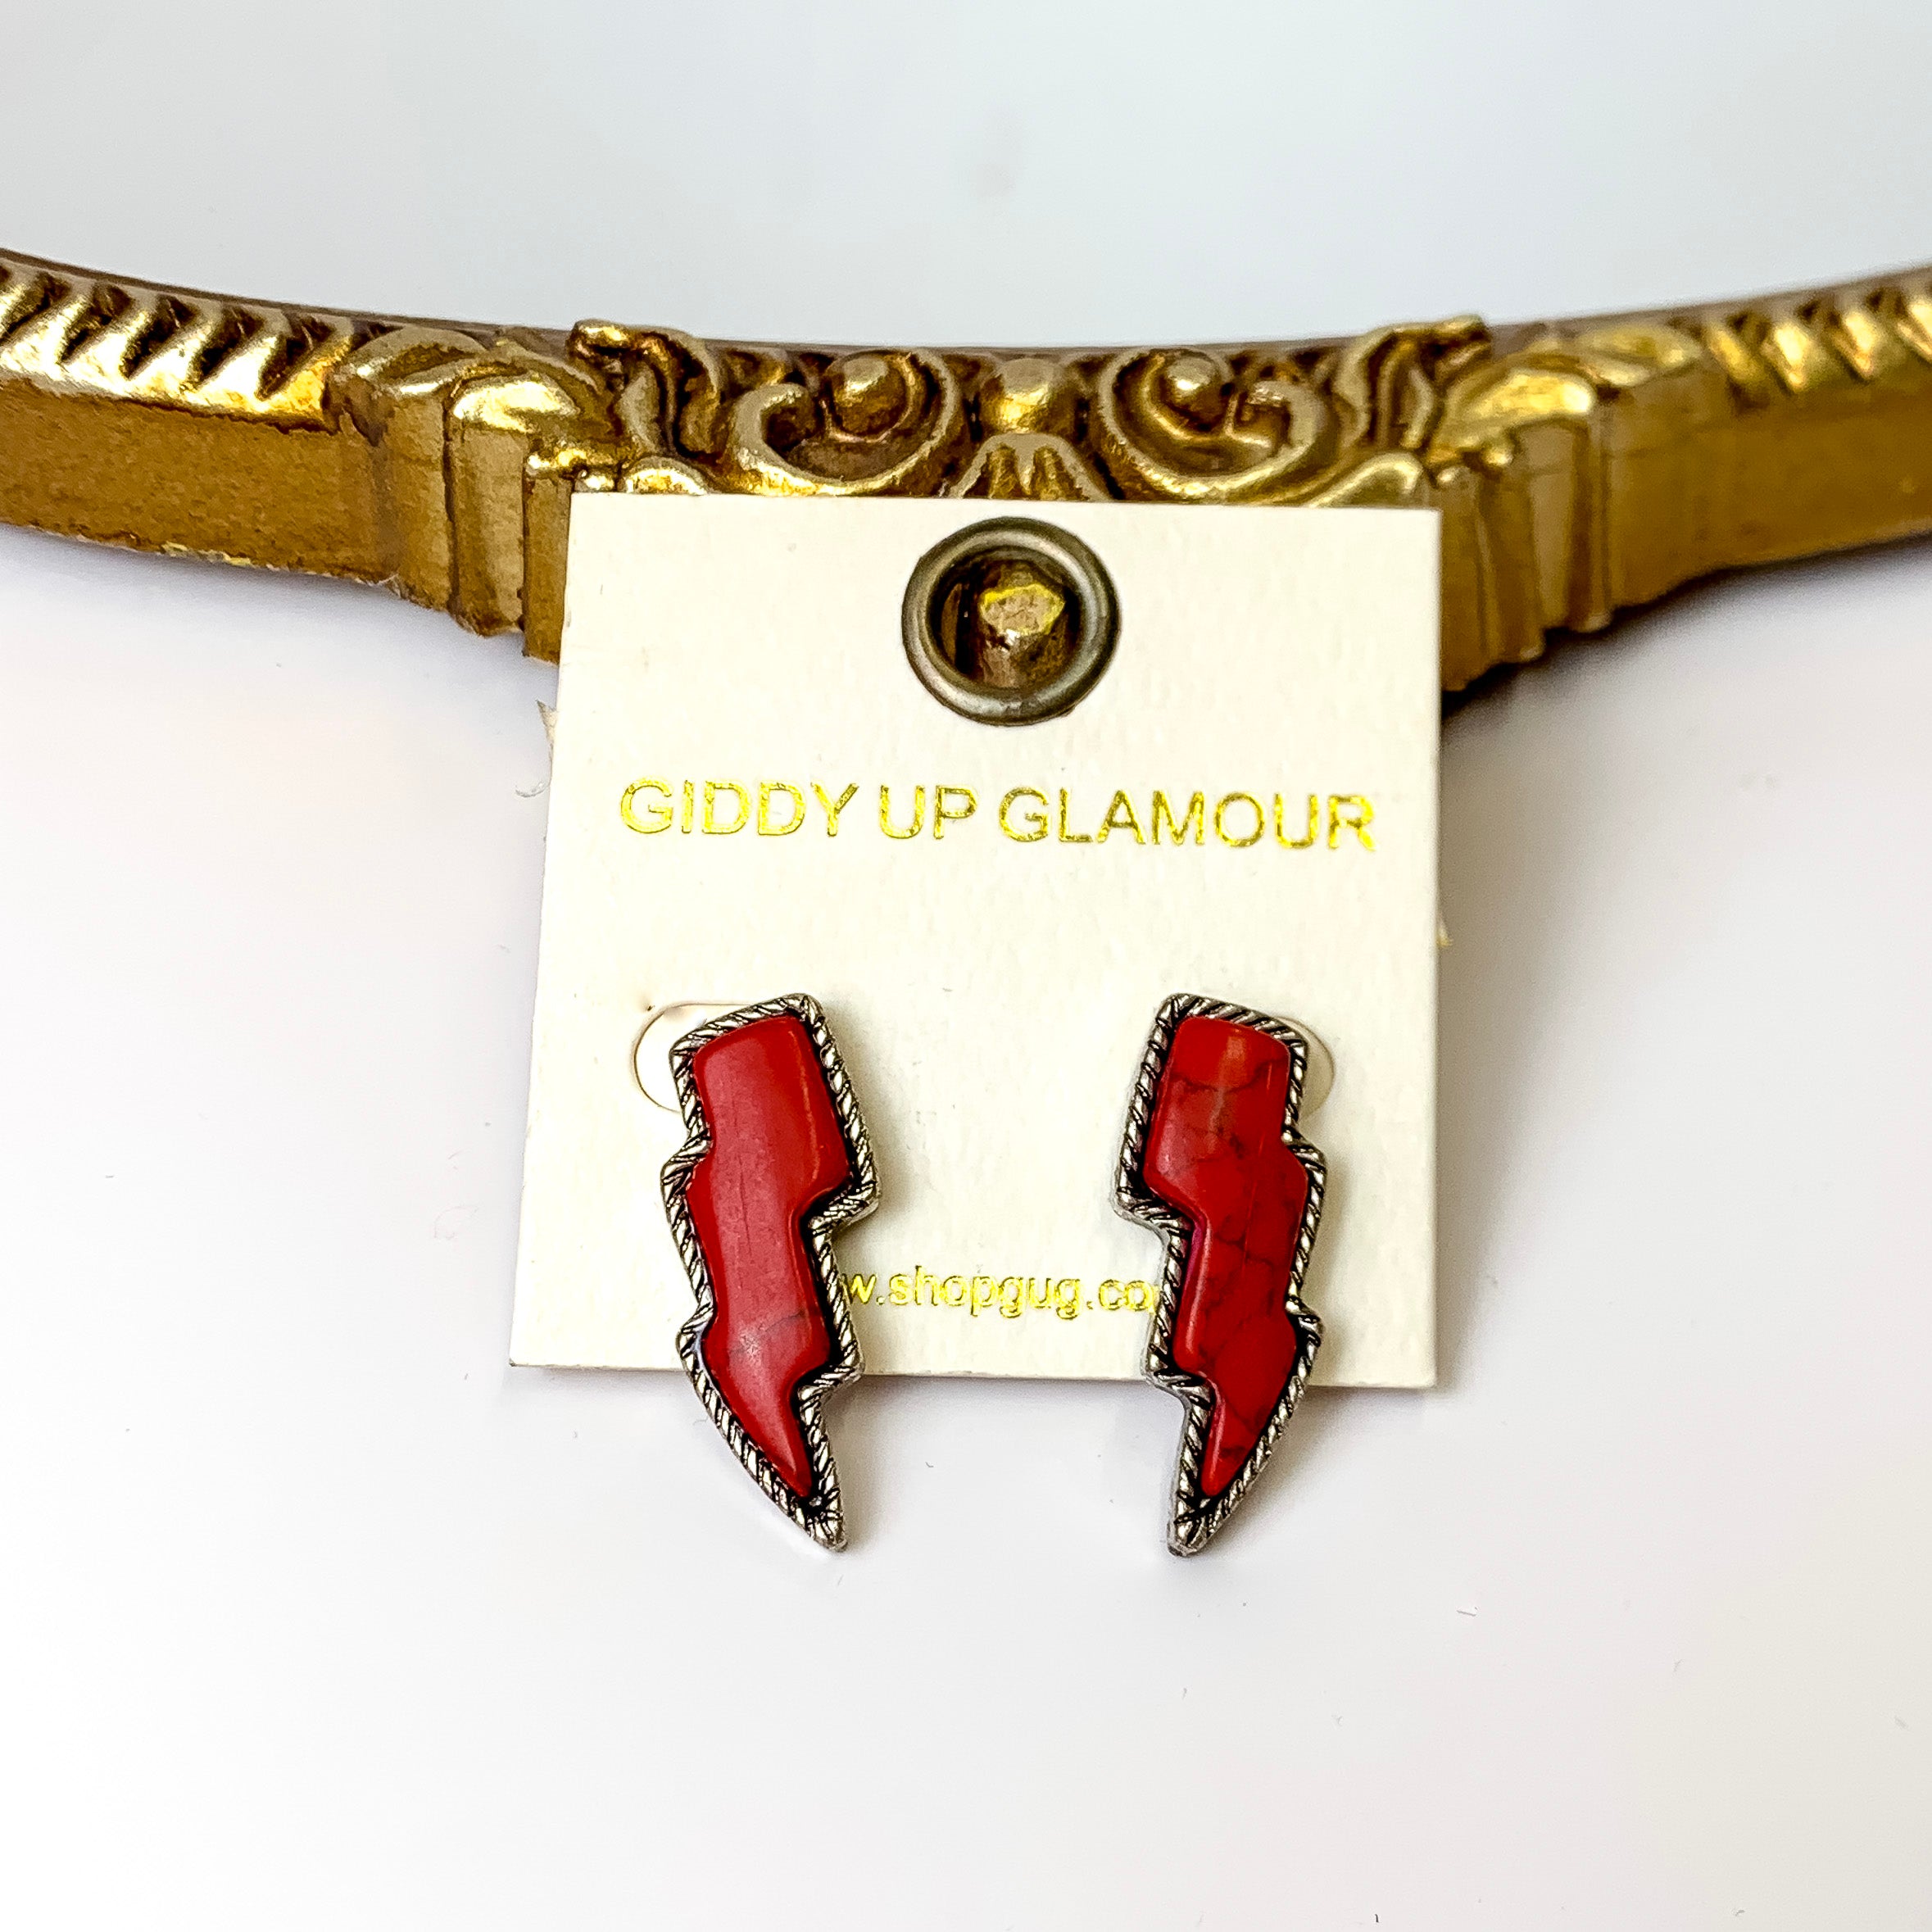 Thunder Struck Lightning Stud Earrings in Dark Red - Giddy Up Glamour Boutique